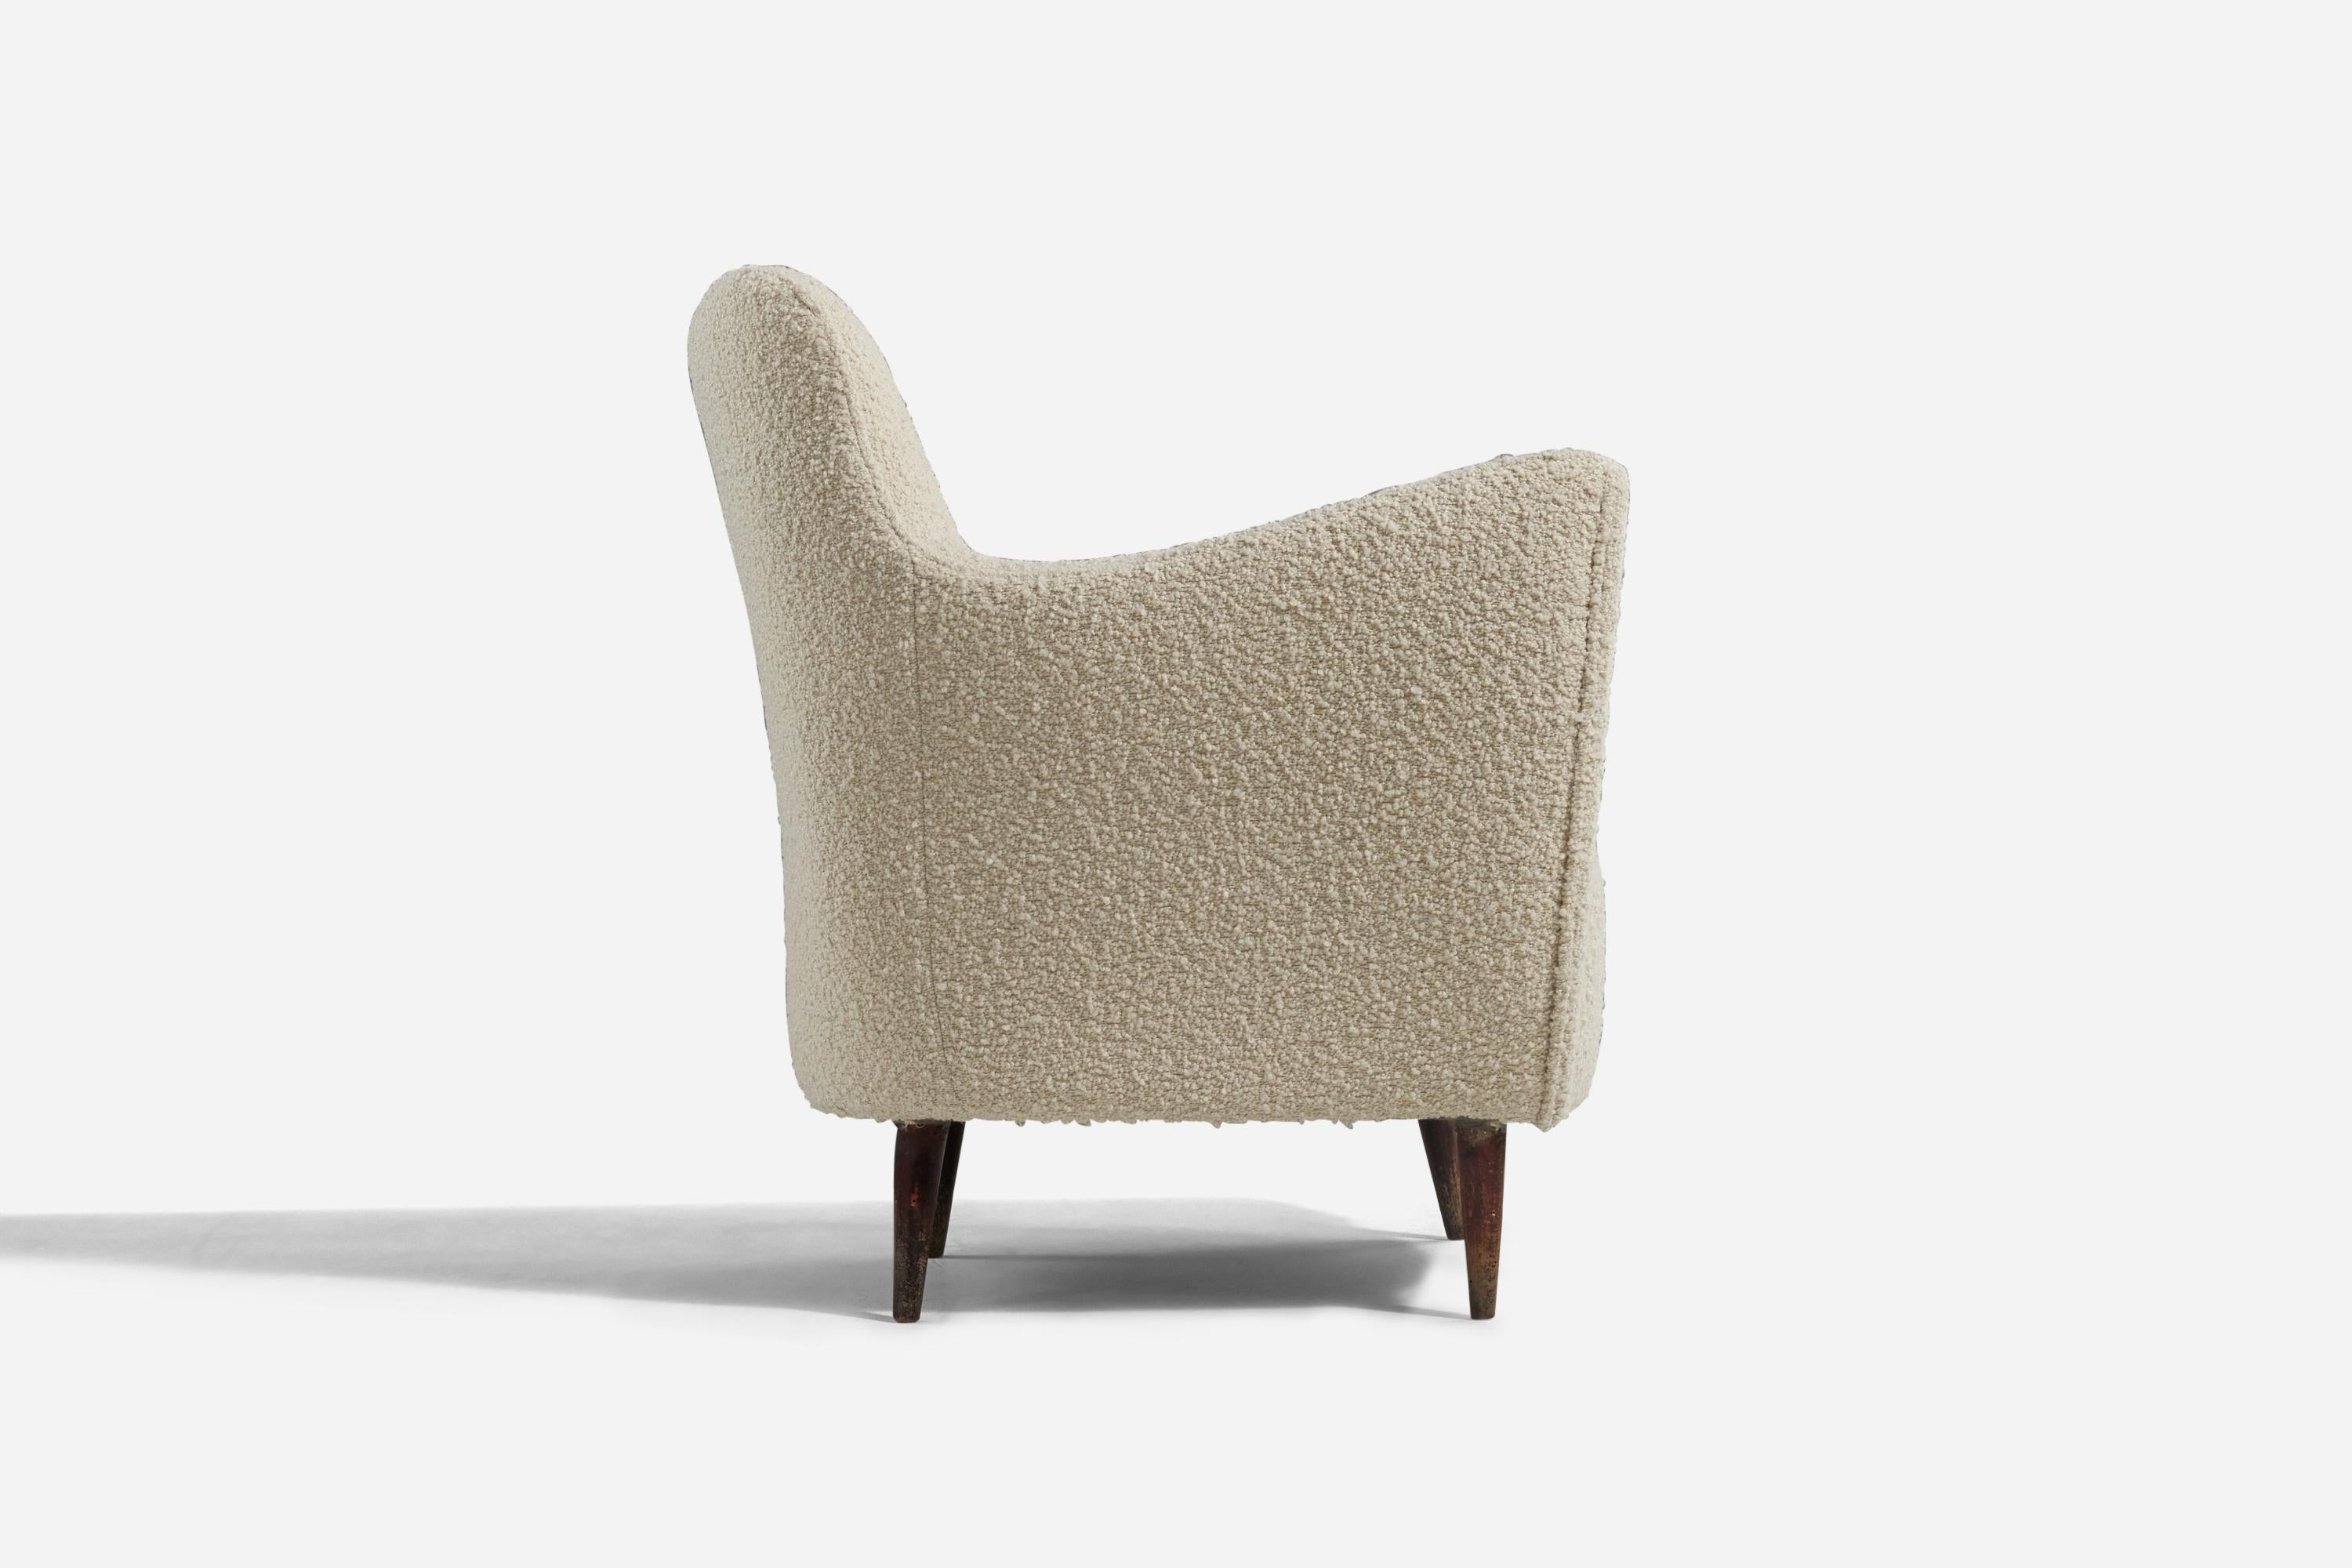 Mid-20th Century Guglielmo Veronesi, Lounge Chairs, Wood, White Fabric, ISA Bergamo, Italy, 1950s For Sale